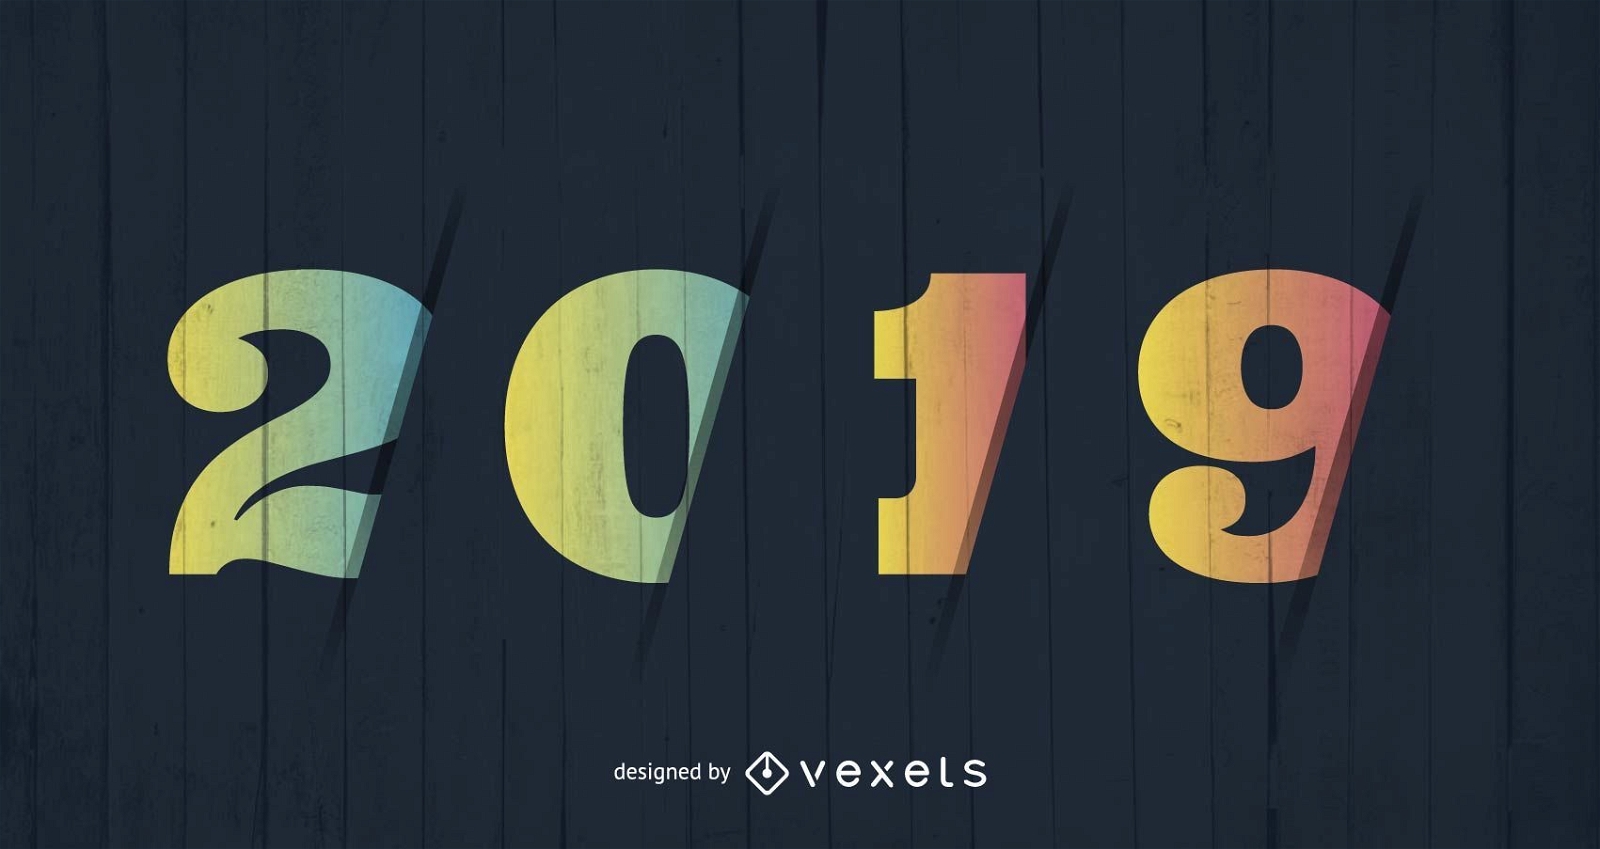 New year 2019 design